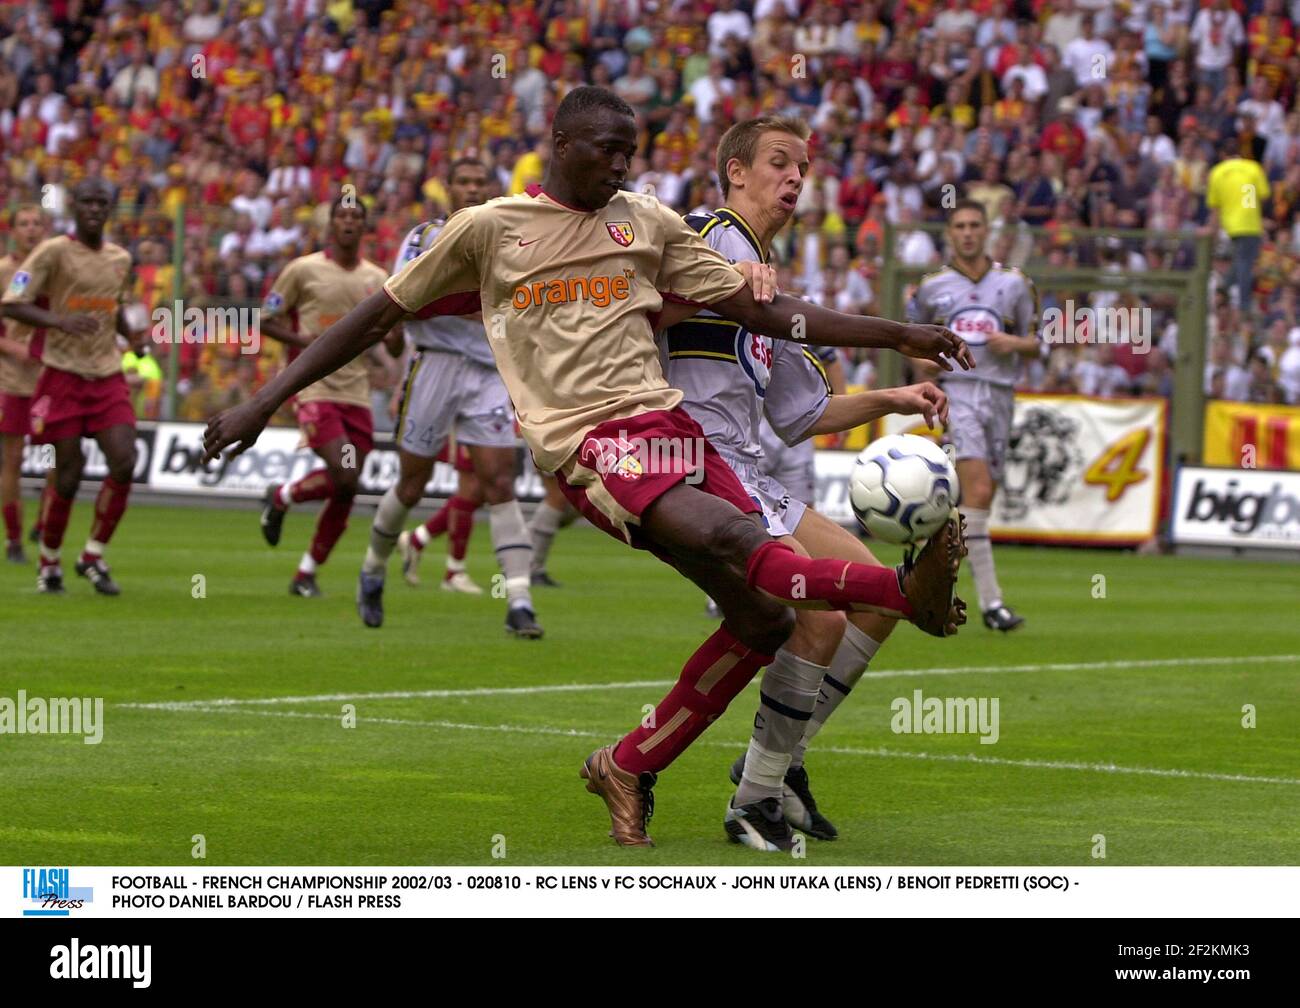 FOOTBALL - CHAMPIONNAT DE FRANCE 2002/03 - 020810 - OBJECTIF RC V FC  SOCHAUX - JOHN UTAKA (LENS) / BENOIT PEDRETTI (SOC) - PHOTO DANIEL BARDOU /  FLASH PRESS Photo Stock - Alamy